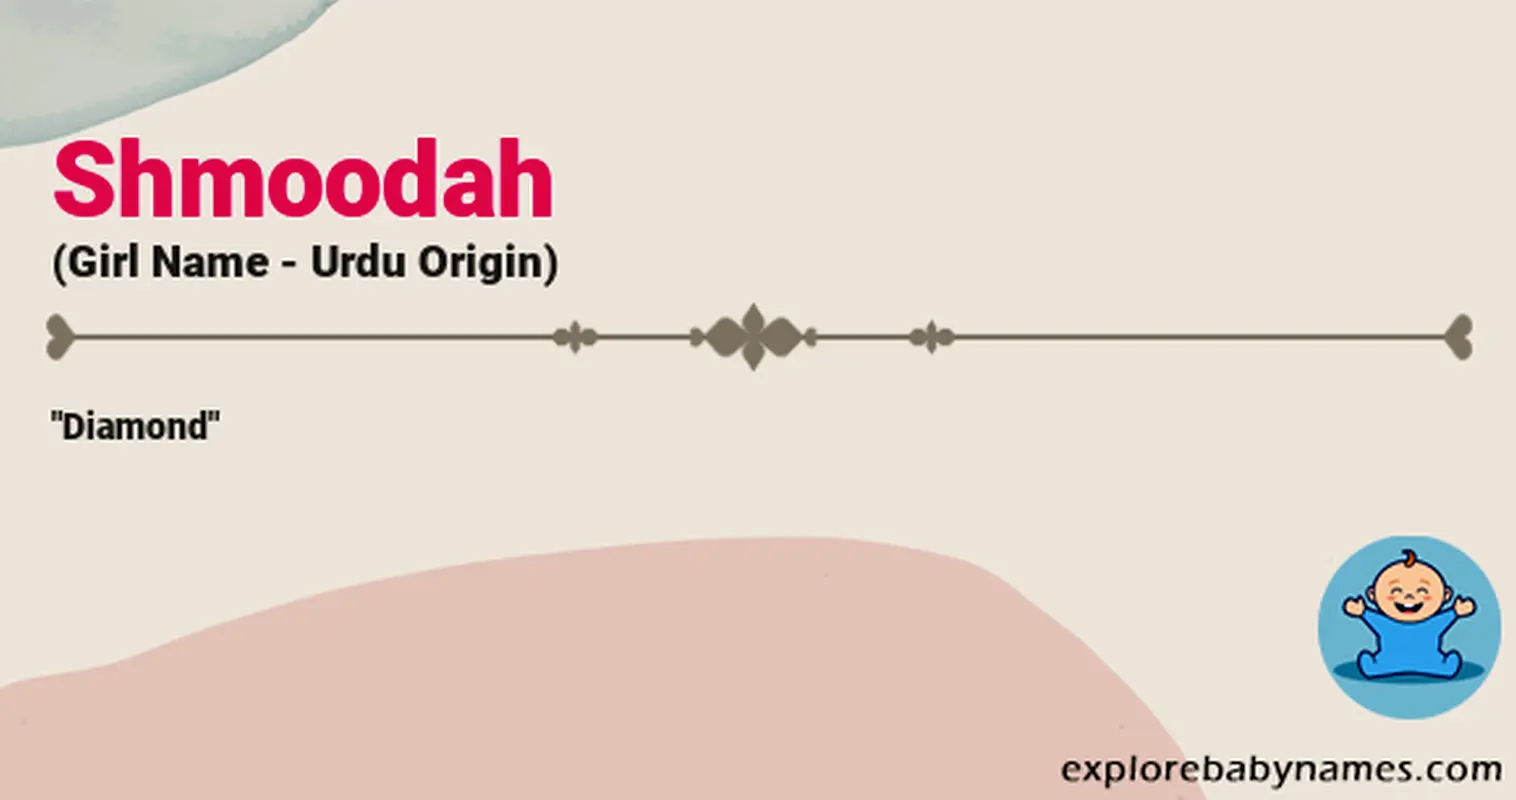 Meaning of Shmoodah